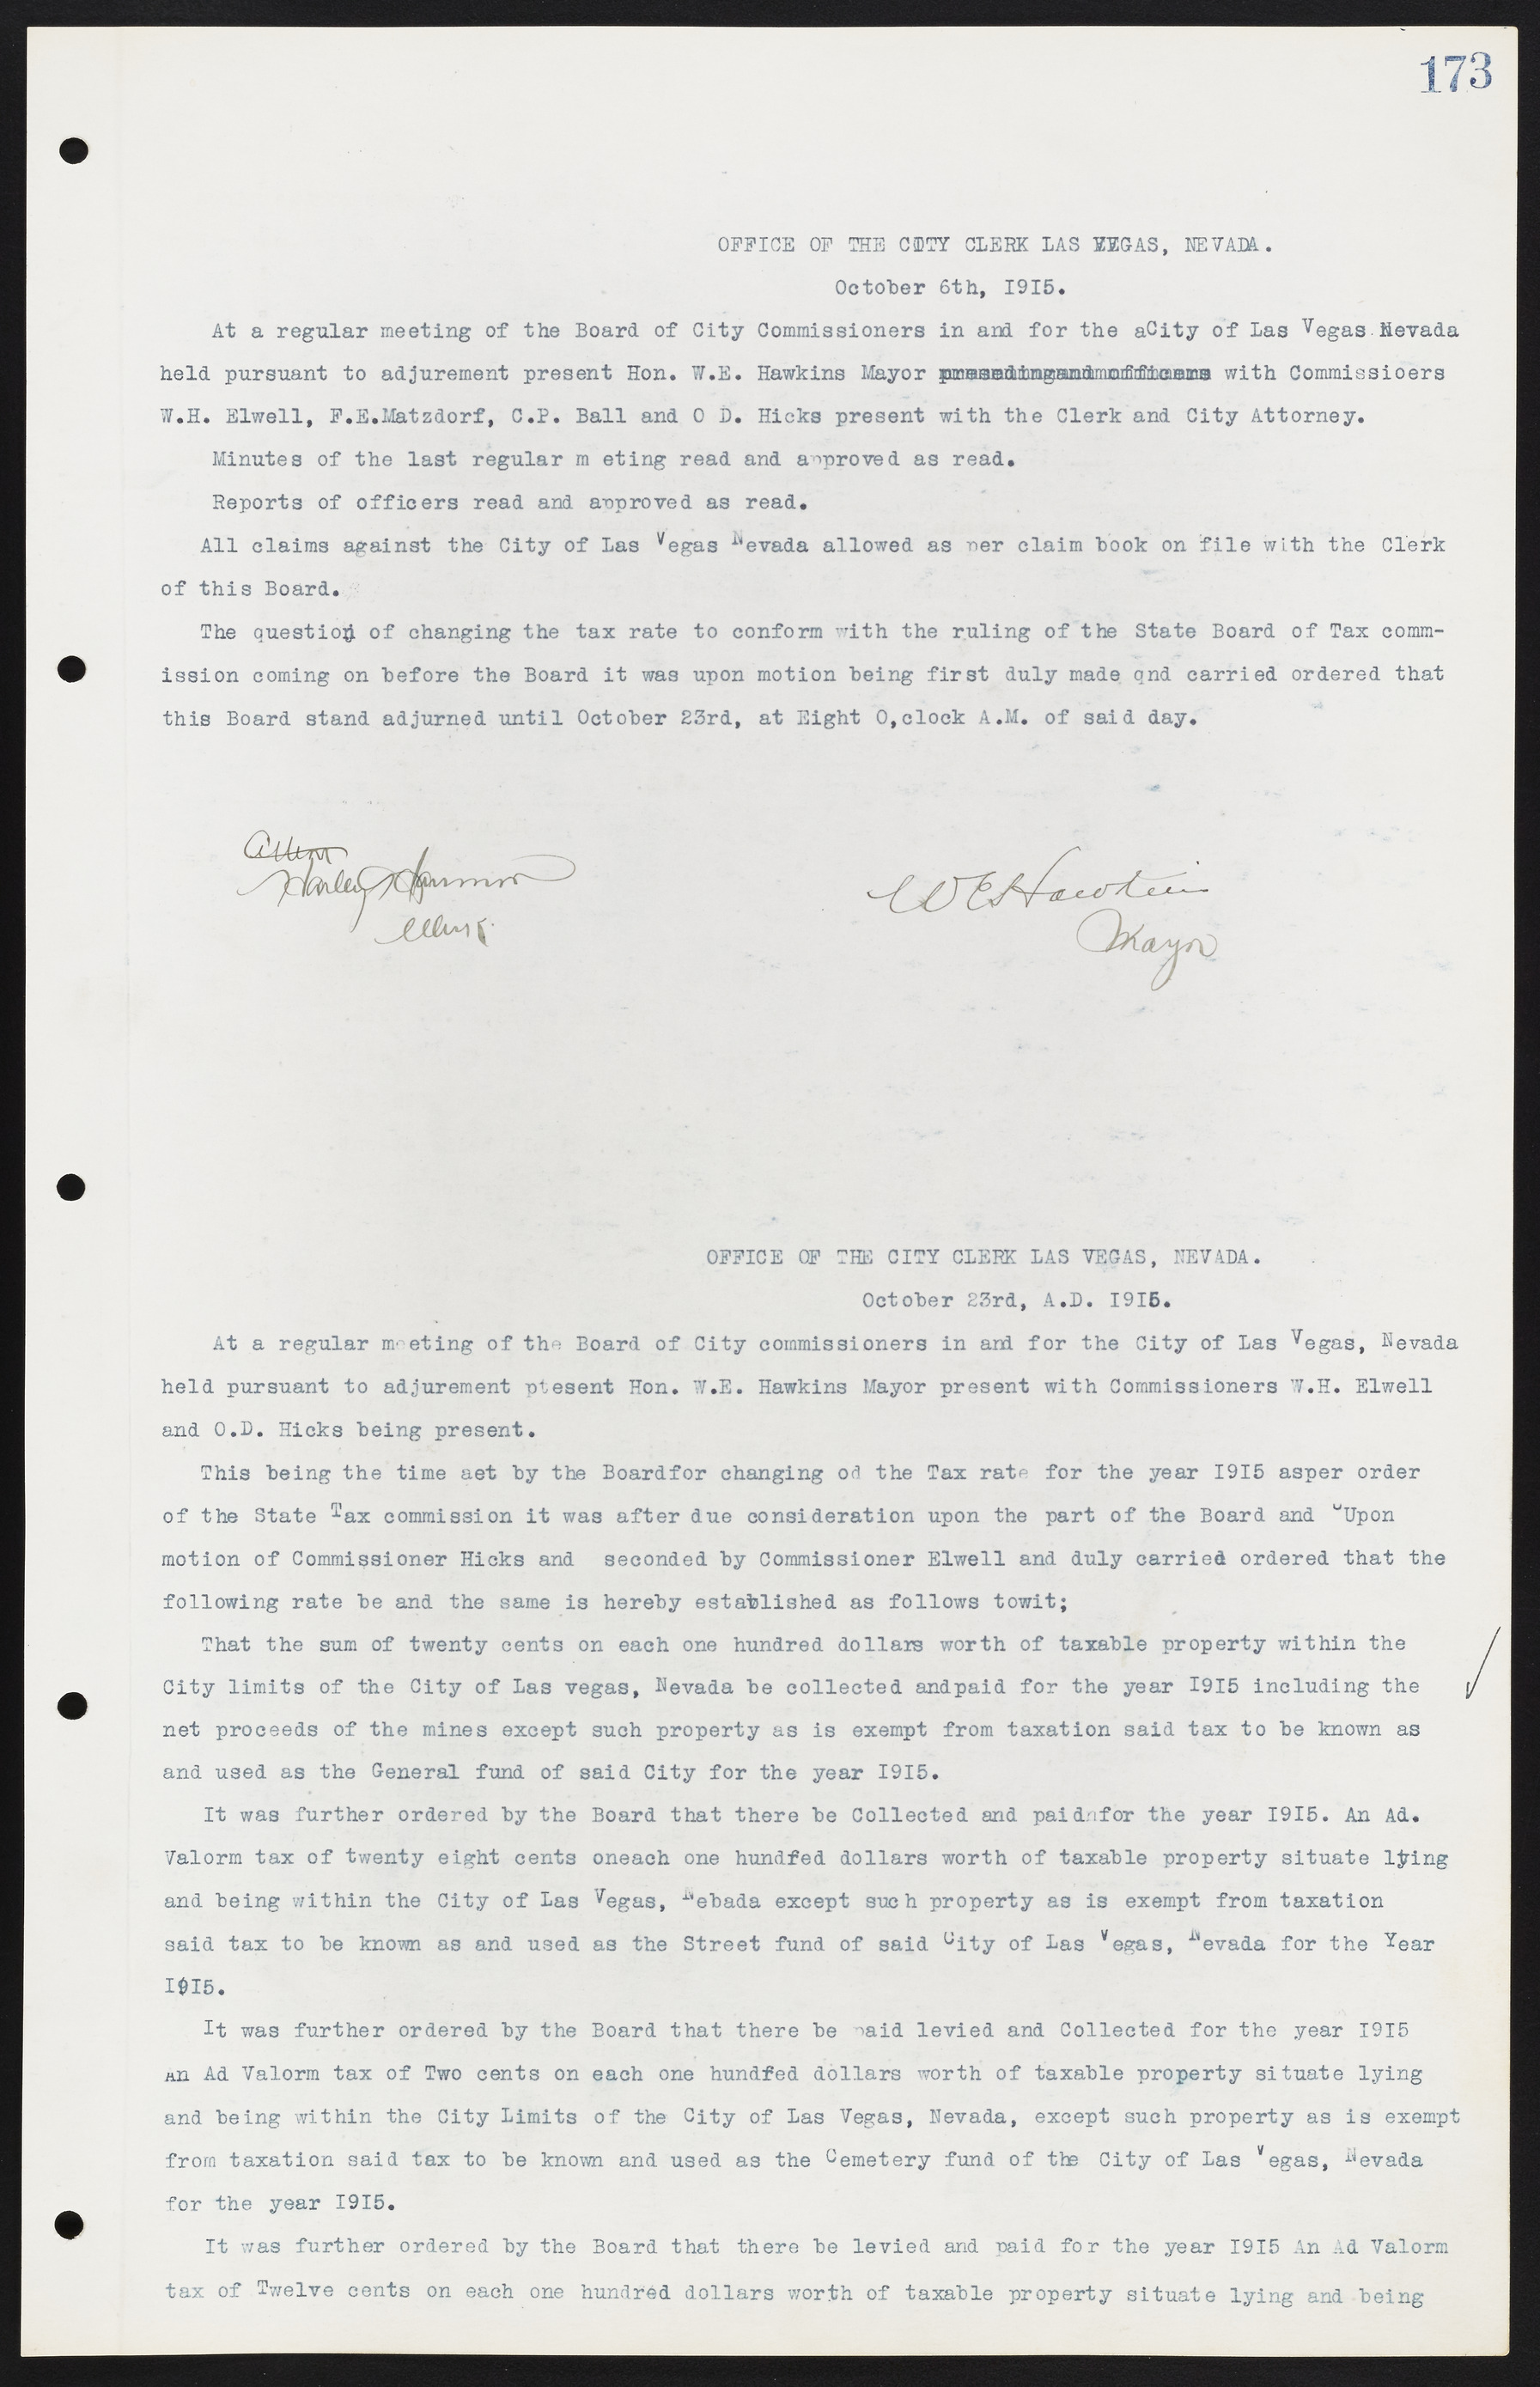 Las Vegas City Commission Minutes, June 22, 1911 to February 7, 1922, lvc000001-189